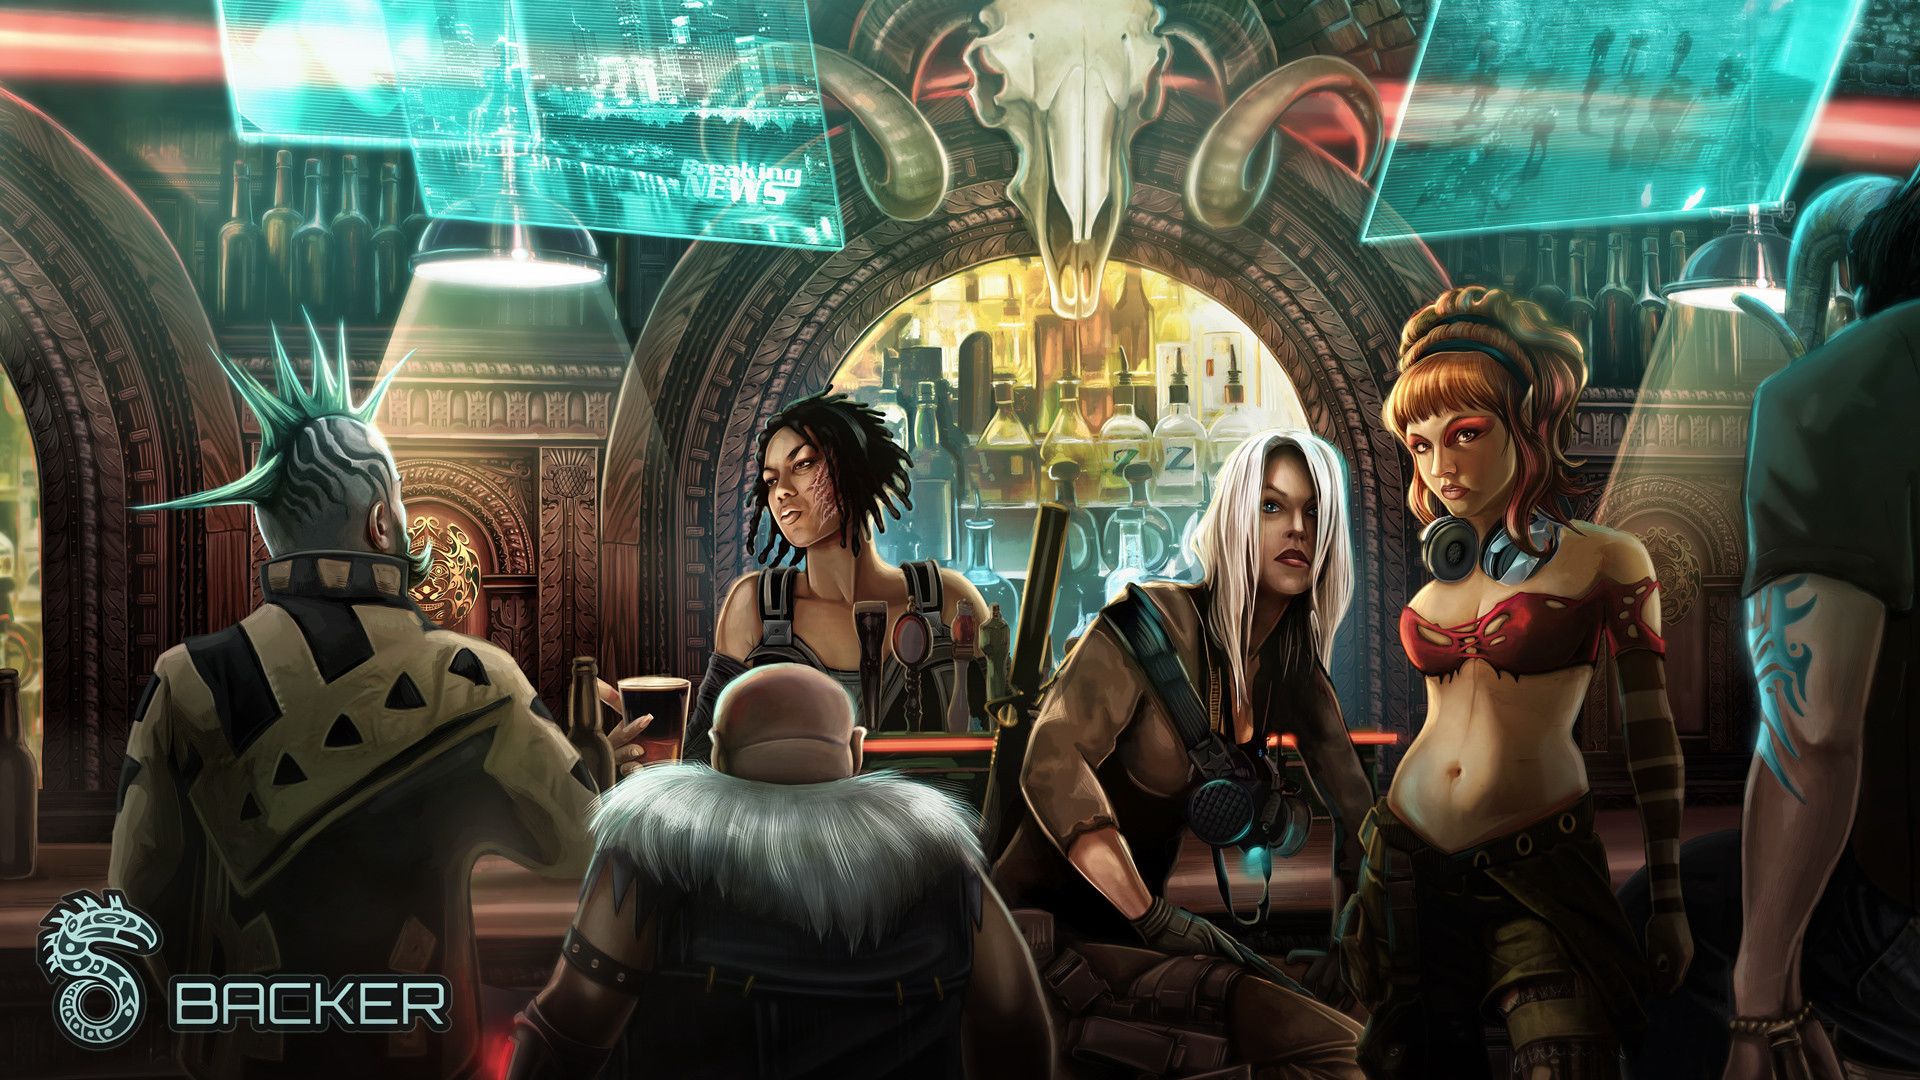 Wallpaper from Shadowrun: Dragonfall's Cut